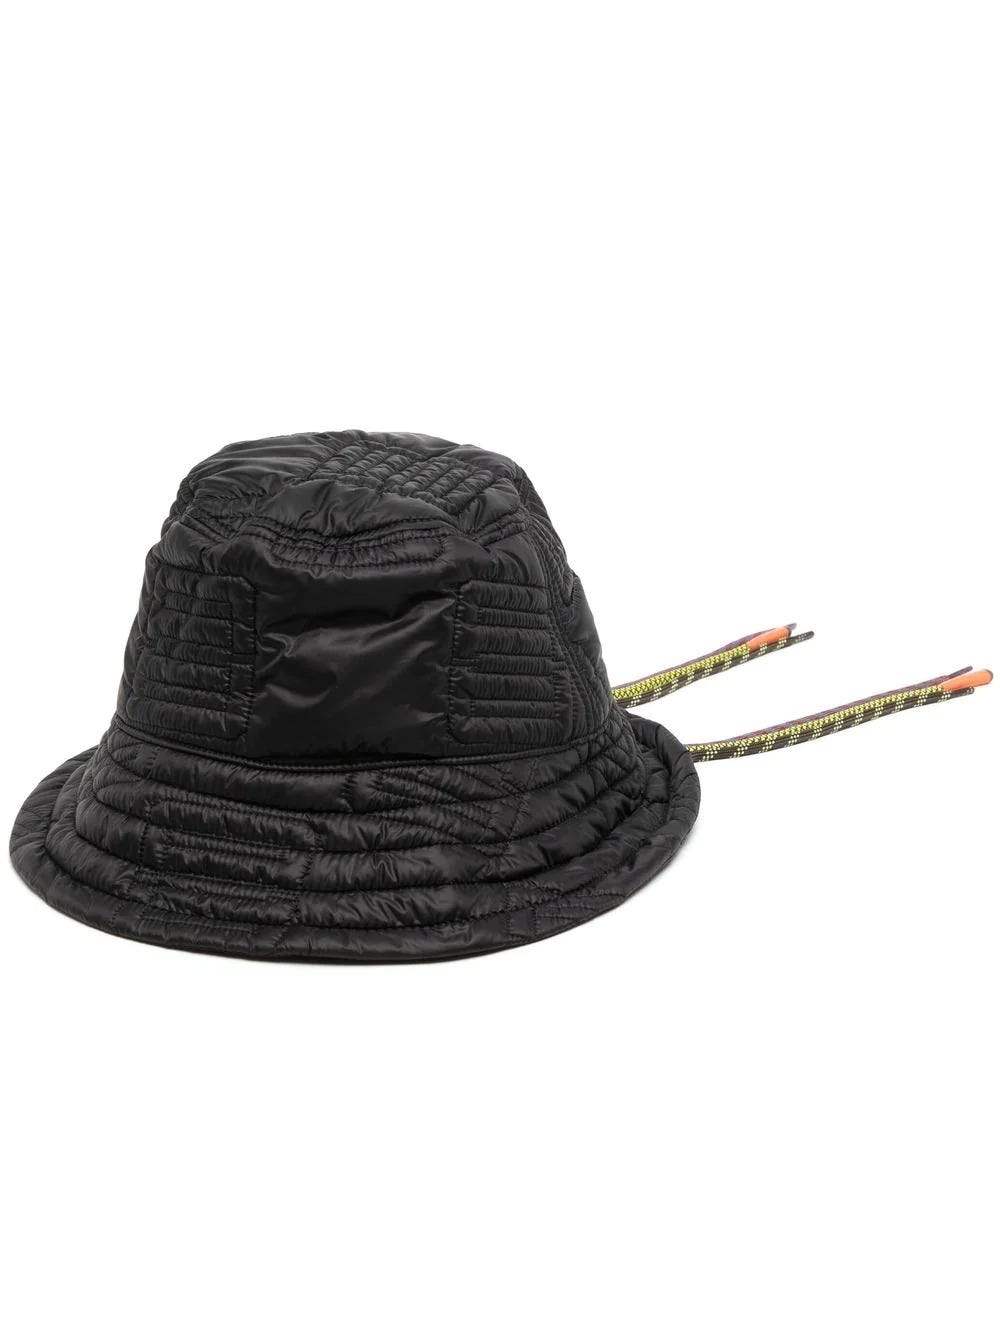 AMBUSH BLACK BUCKET HAT WITH COLORED DRAWSTRING